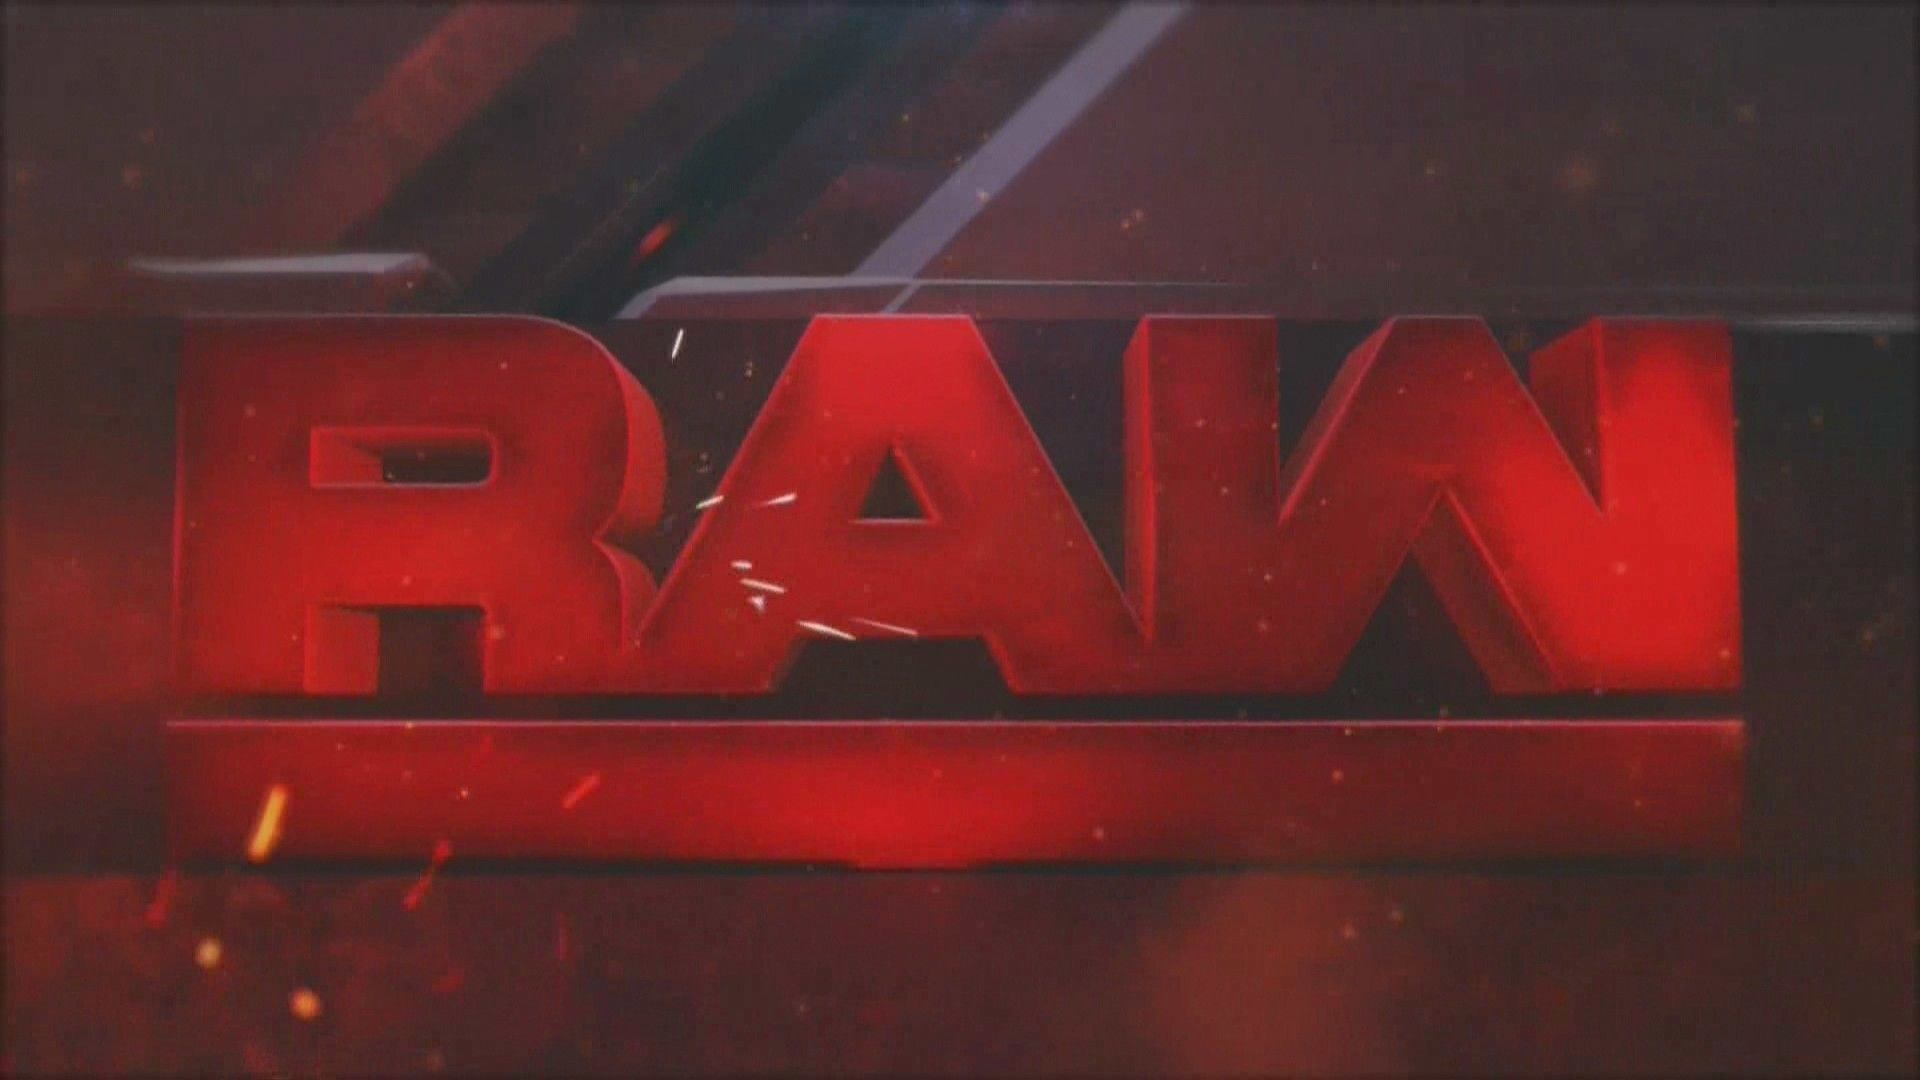 WWE Raw Wallpaper Free WWE Raw Background